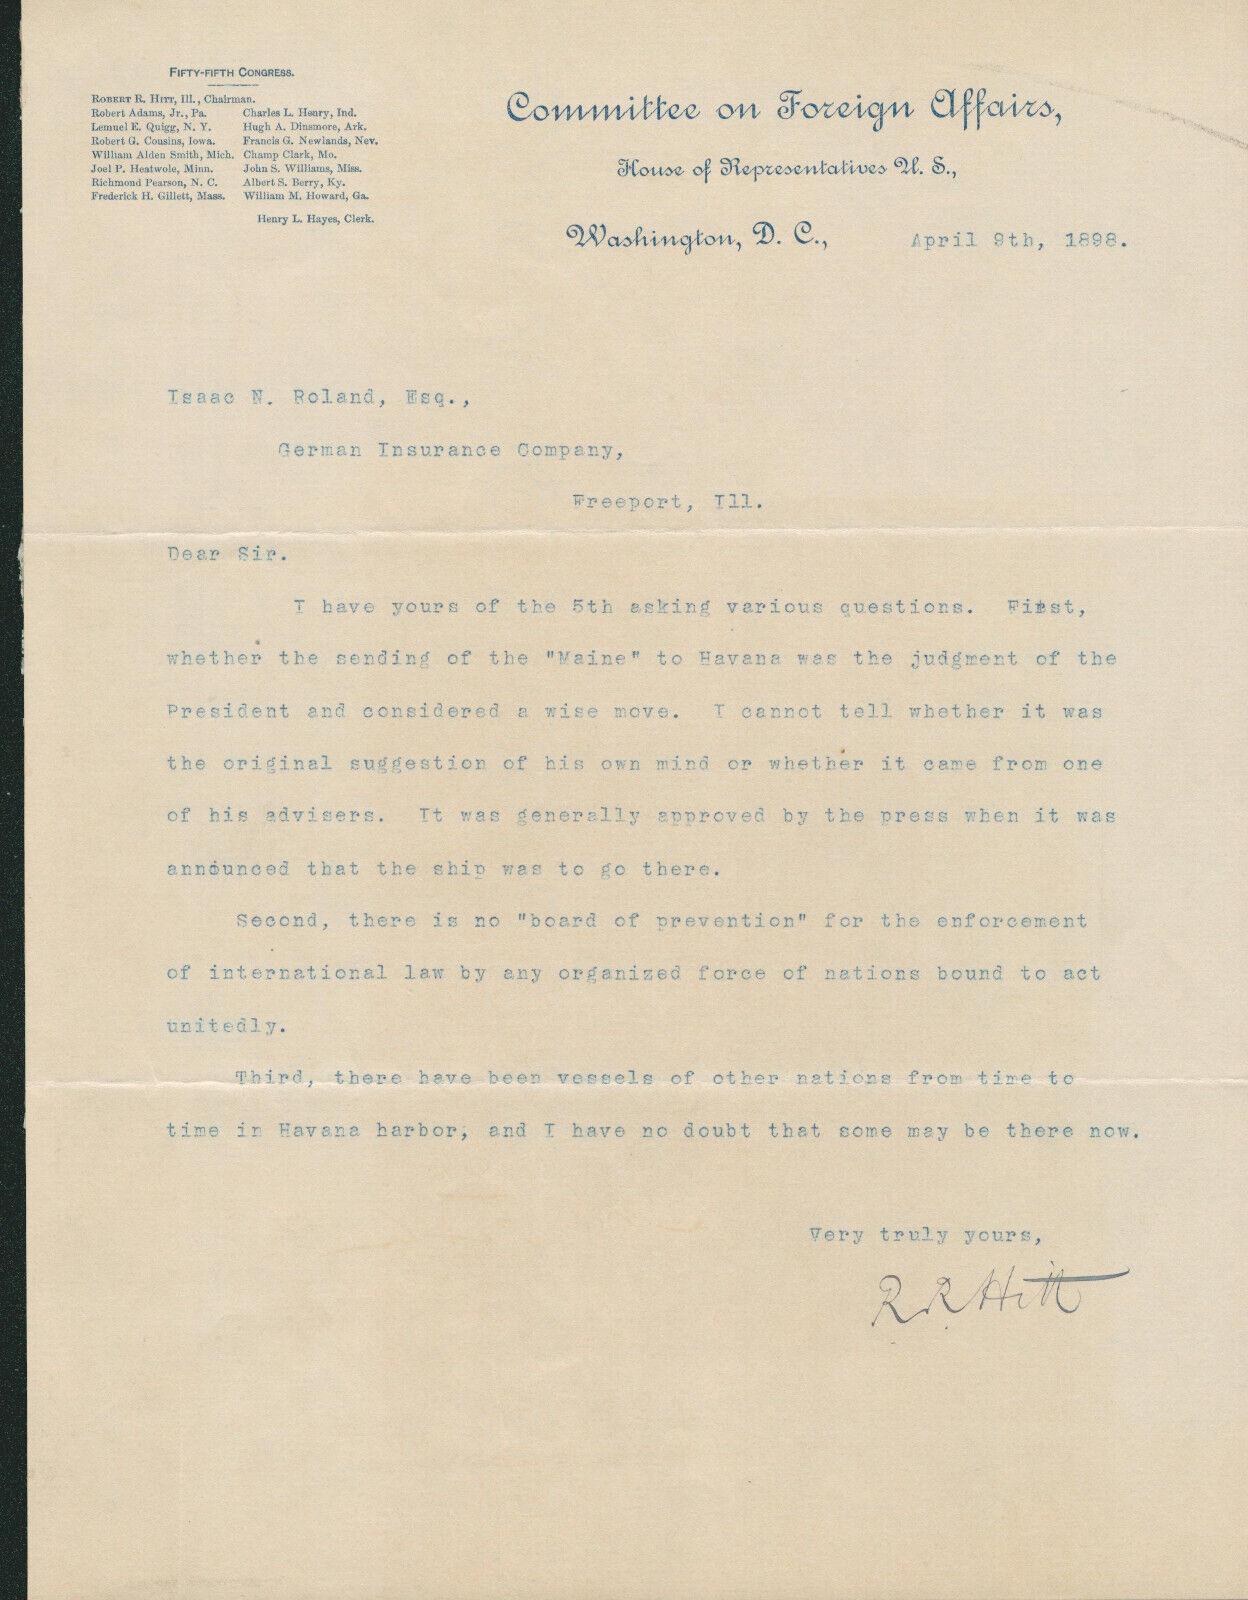 Robert R Hitt SIGNED AUTOGRAPH Letter Congress Committee on Foreign Affairs 1898